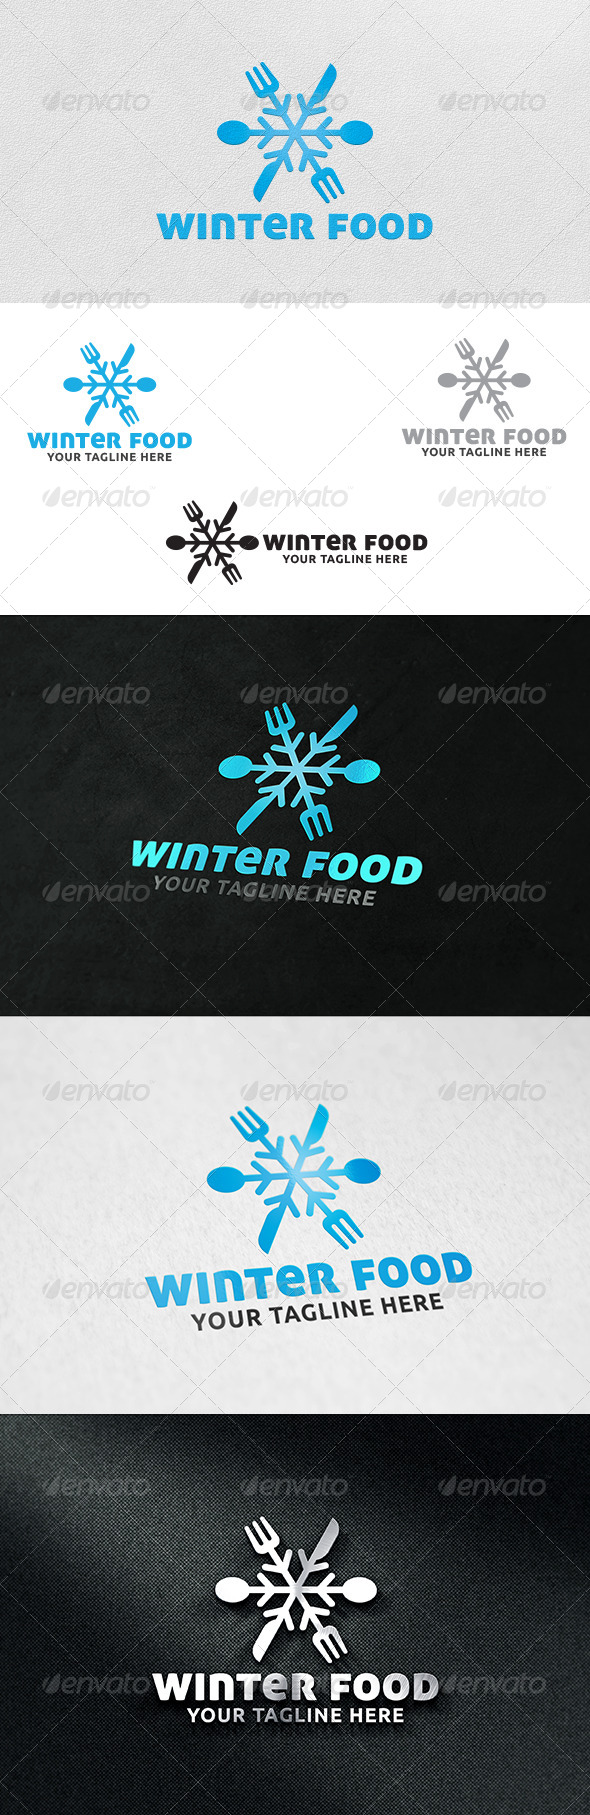 Winter Food V2 - Logo Template